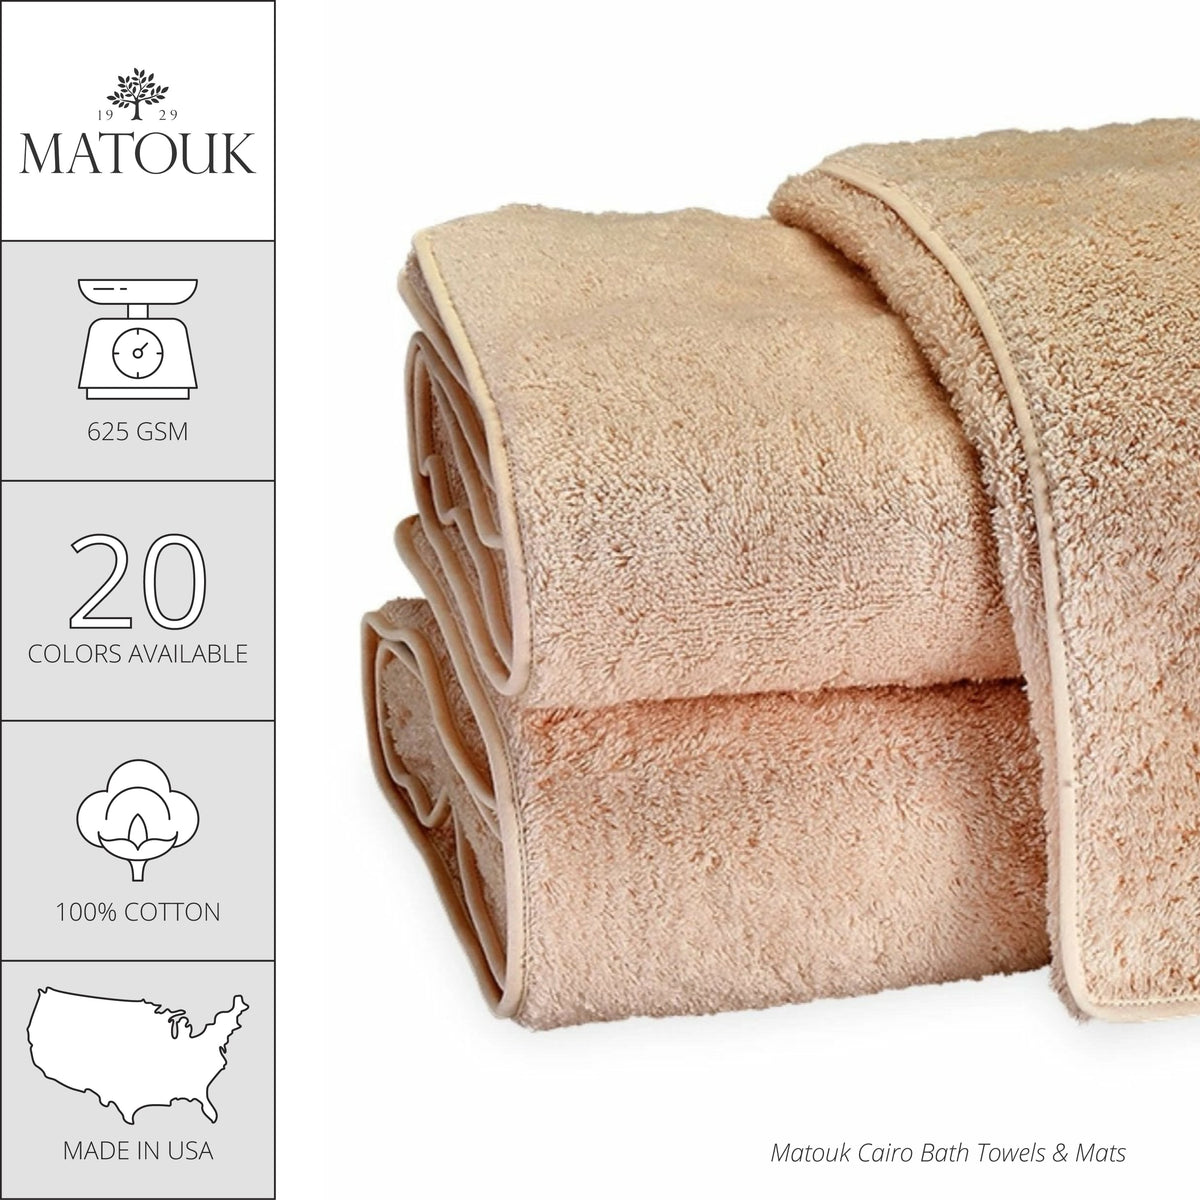 Matouk Cairo Bath Towels and Mats - Sand/Sand